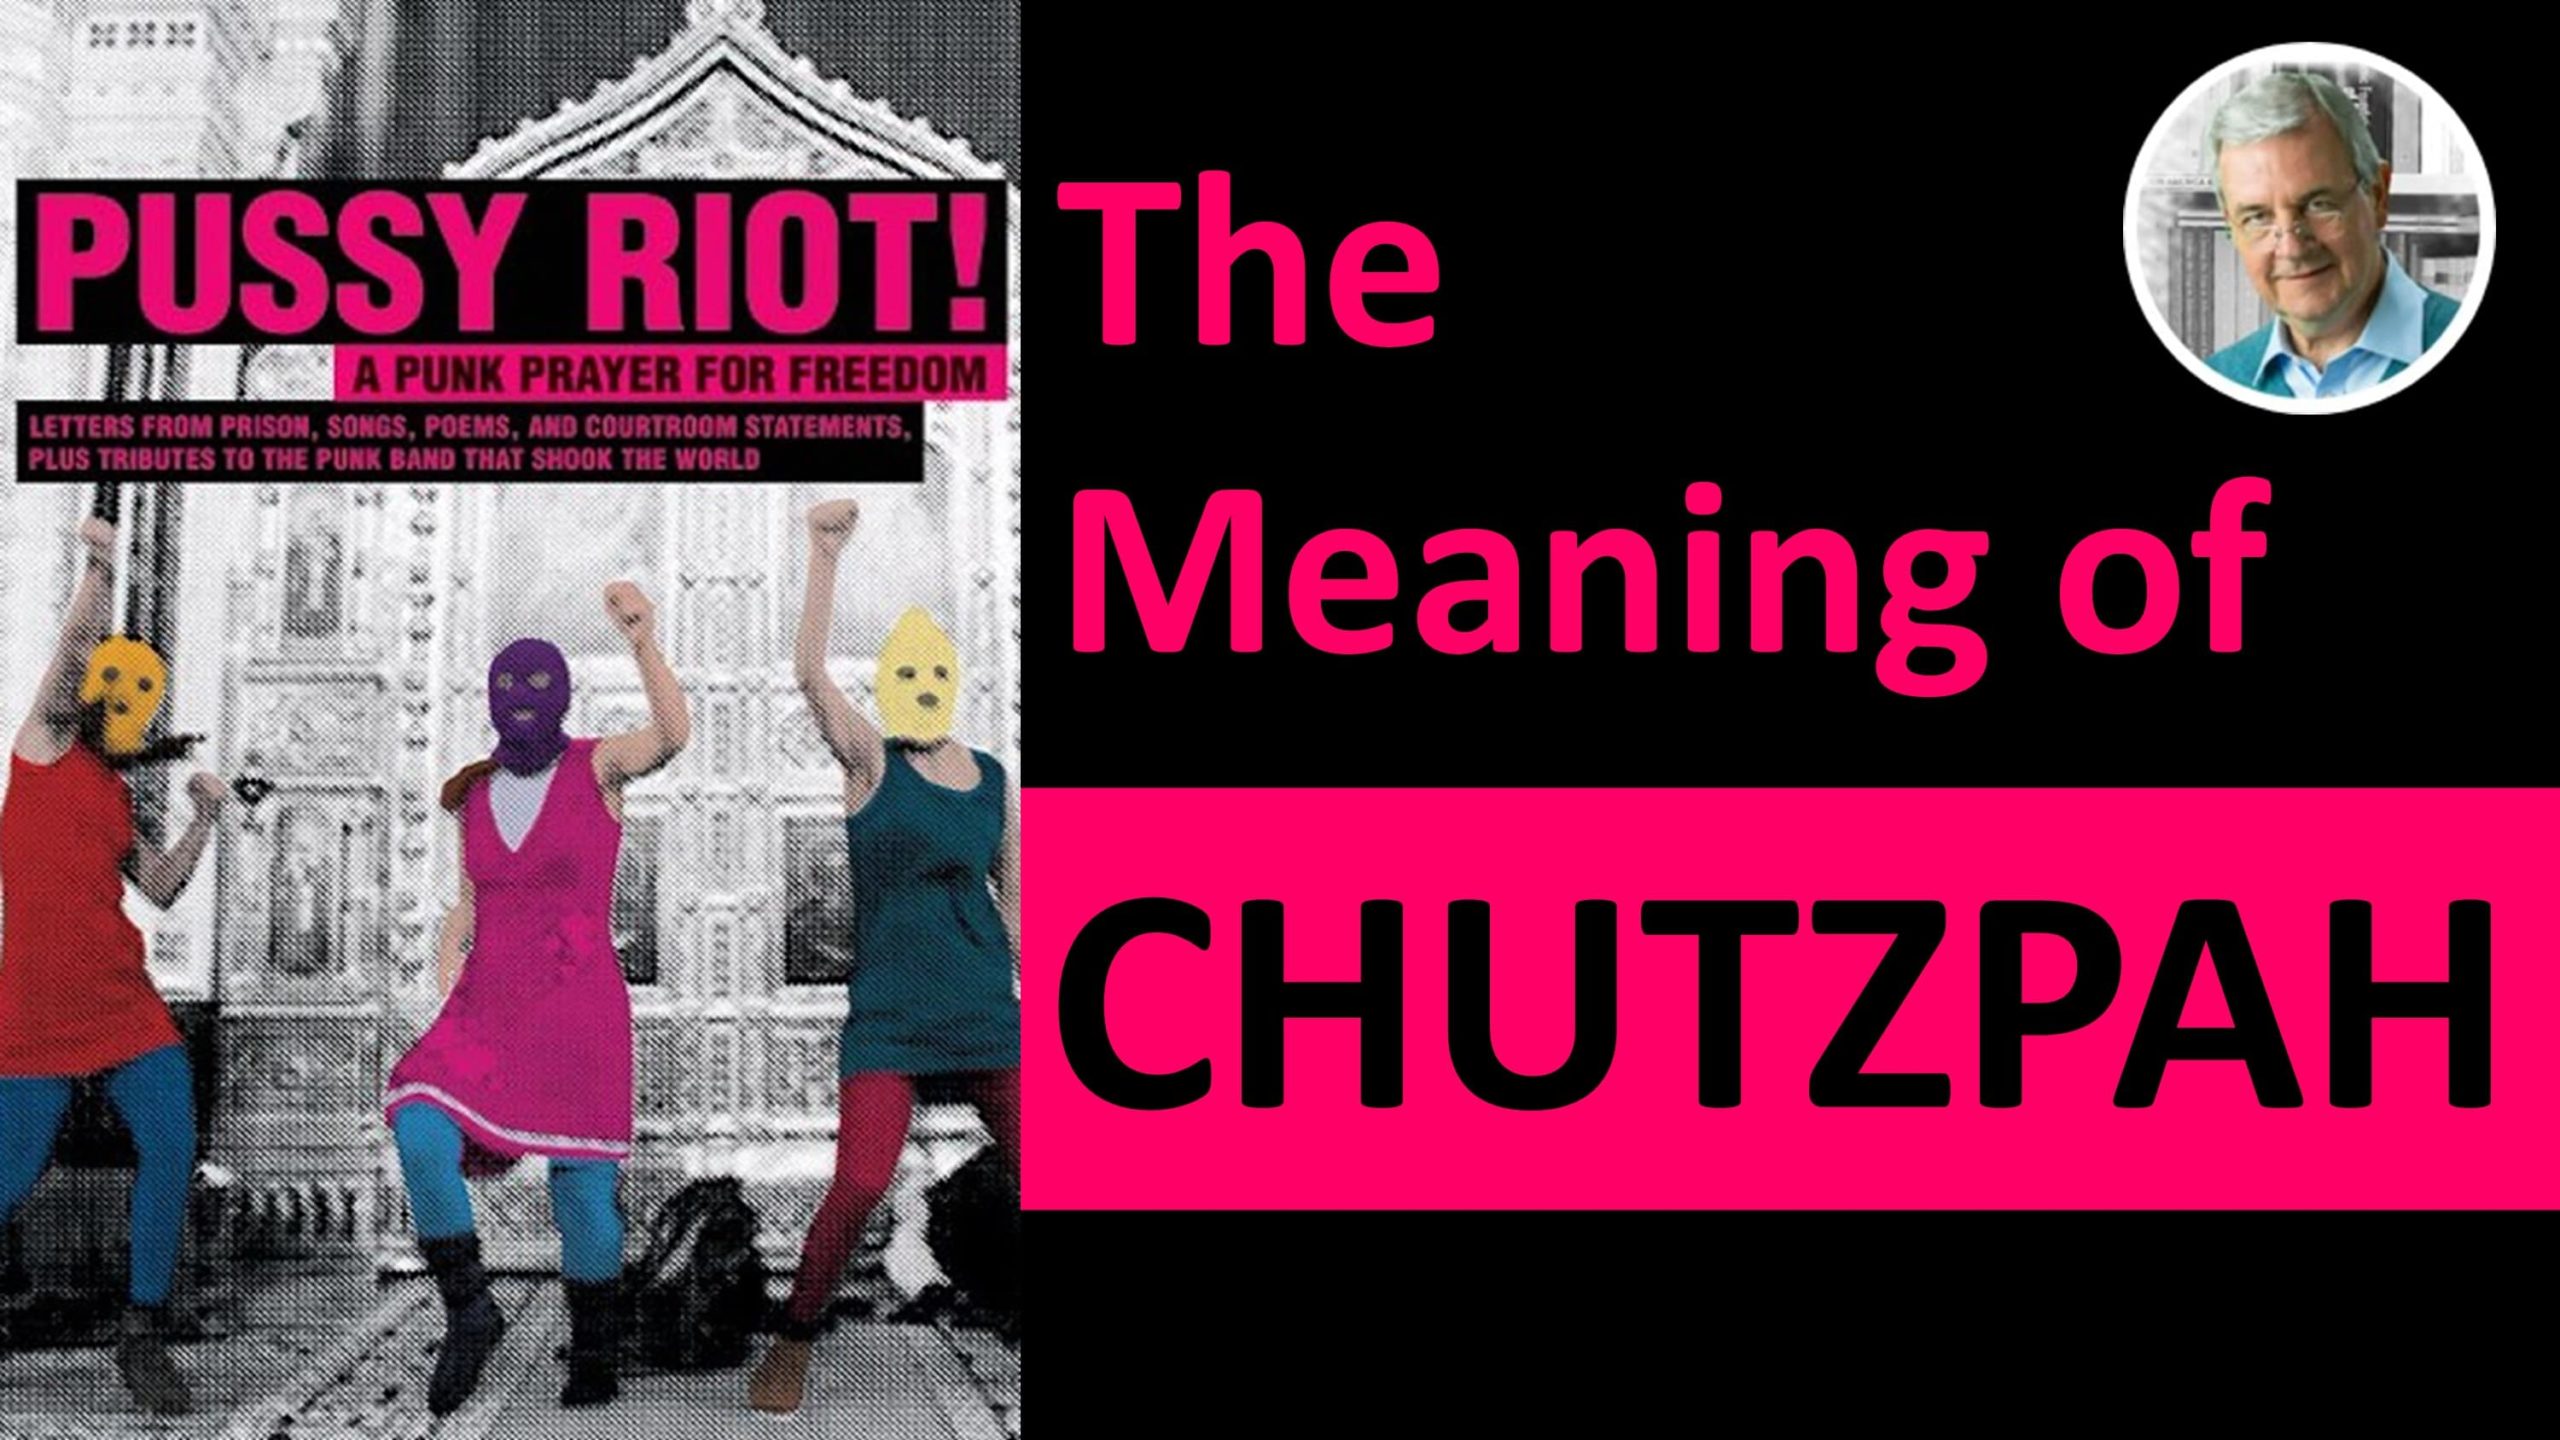 Pronunciation of Chutzpah  Definition of Chutzpah 